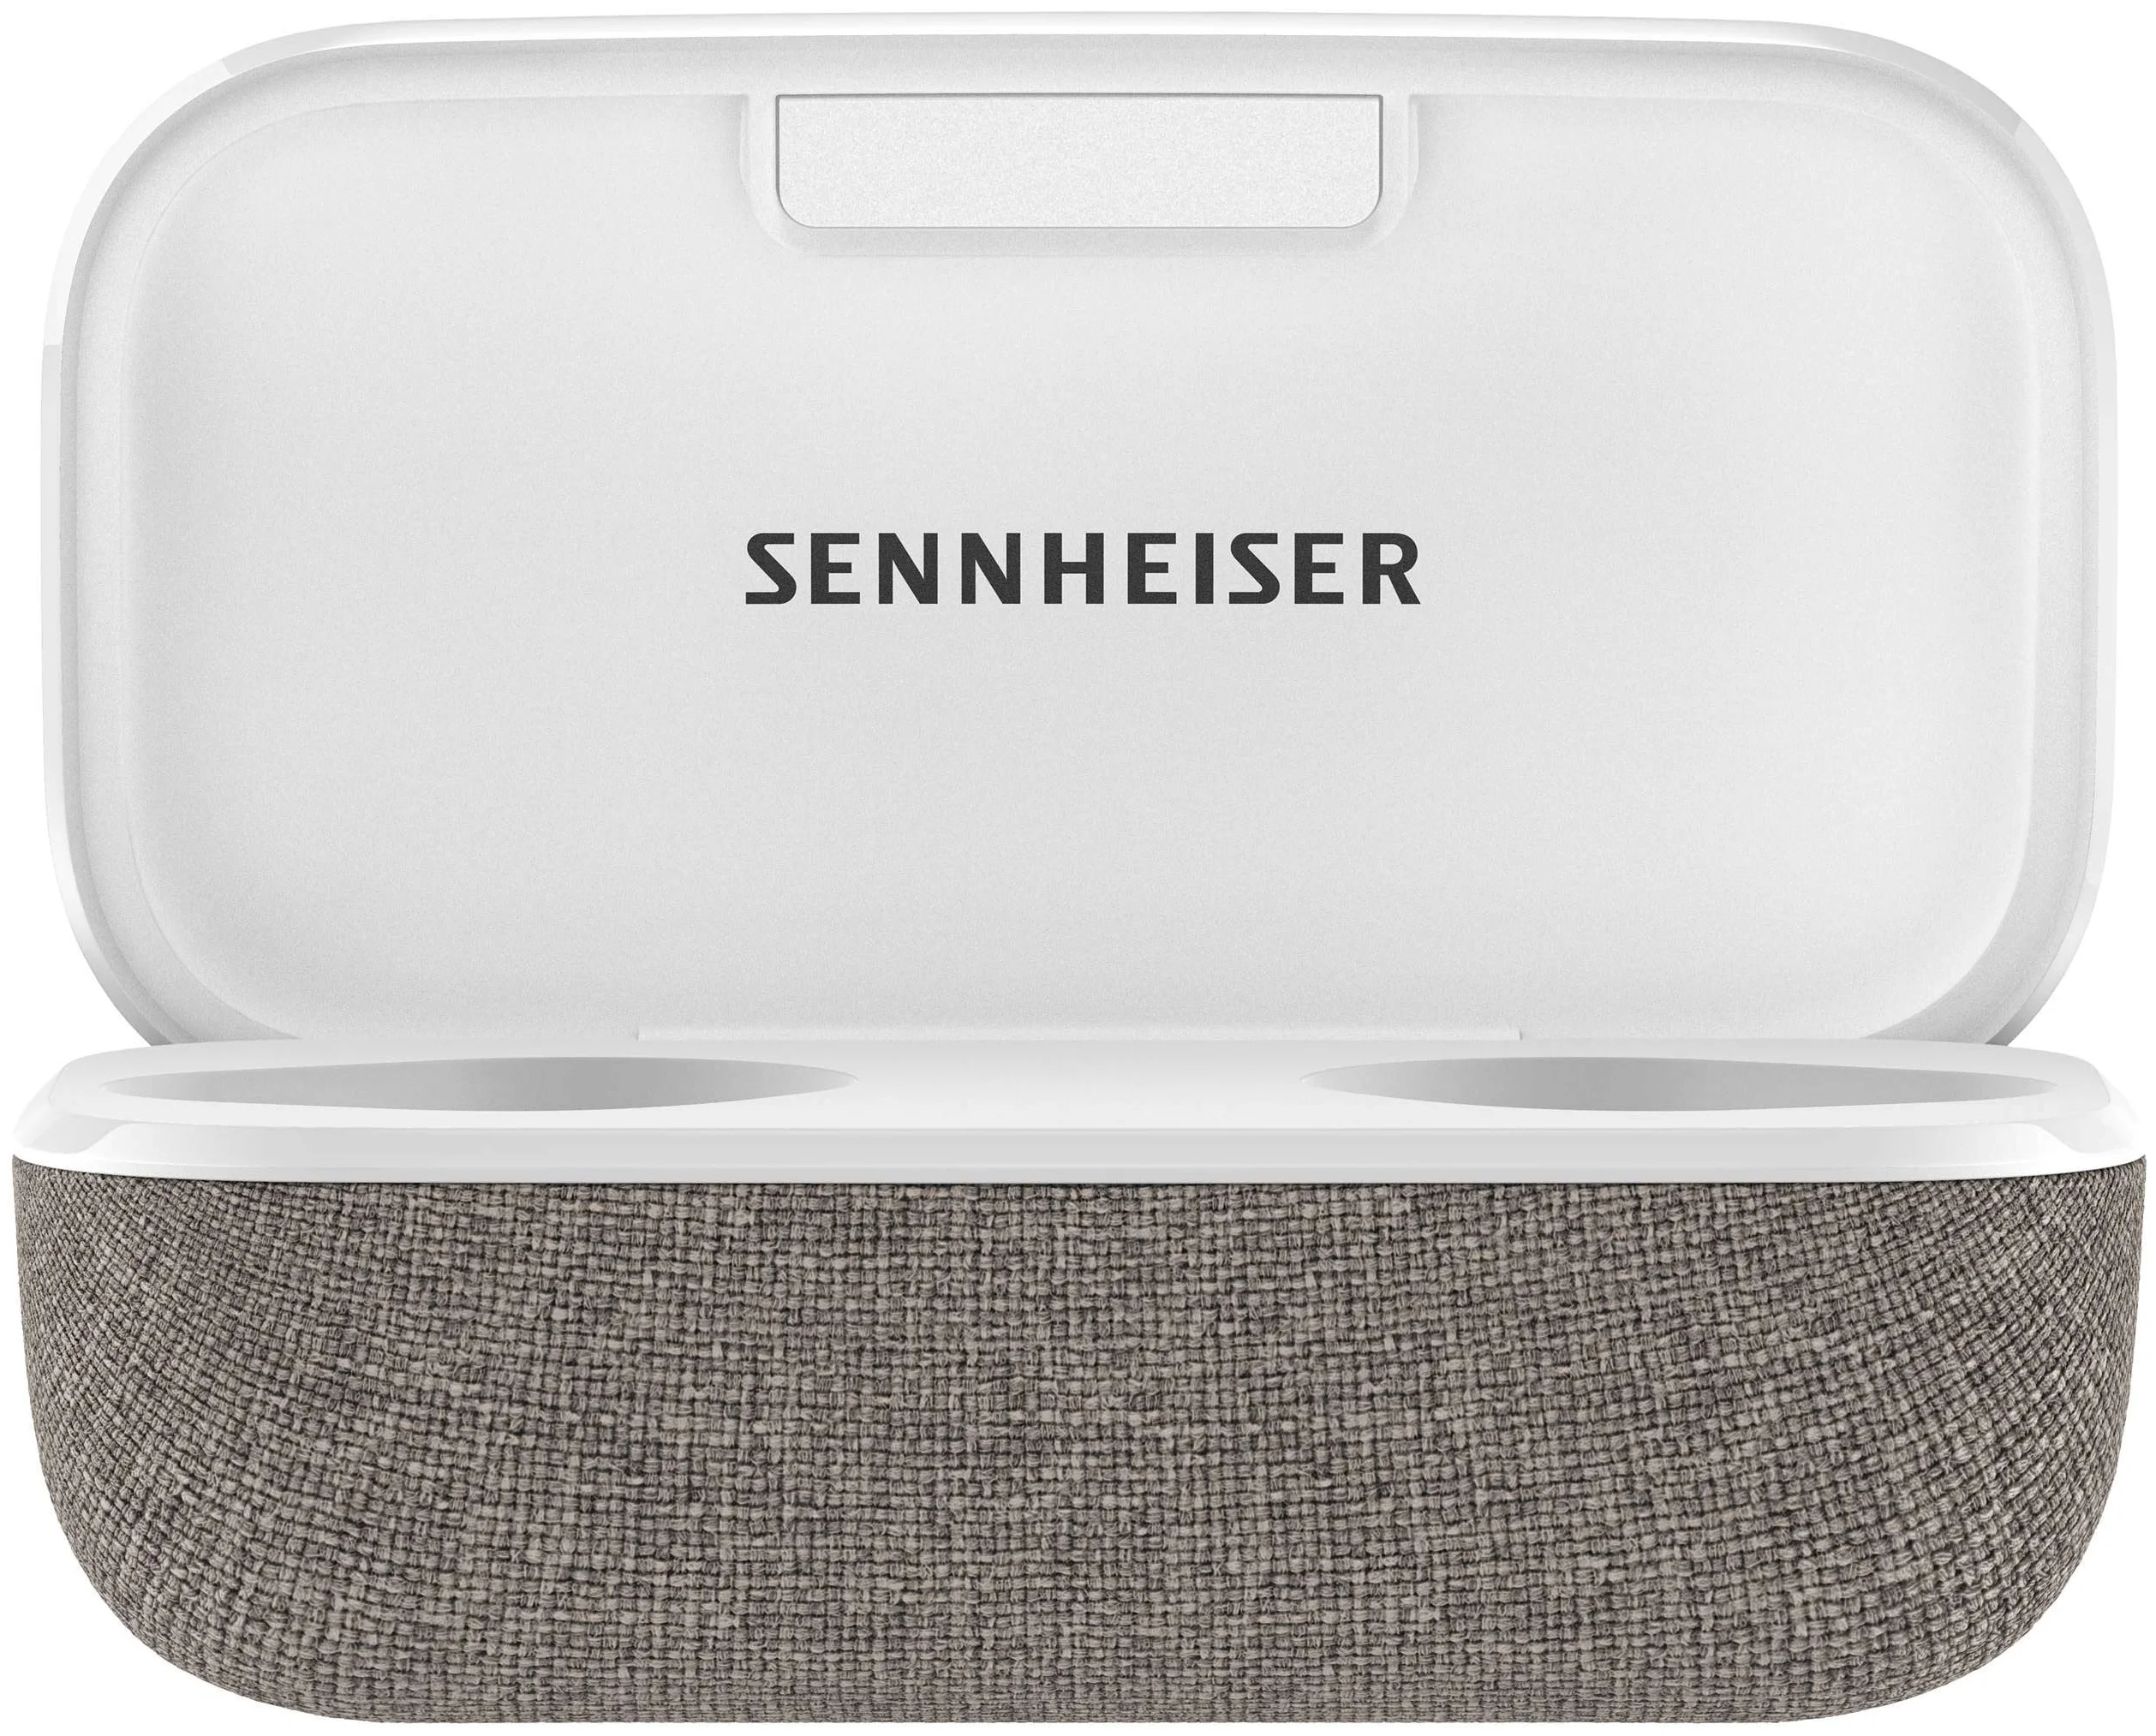 Sennheiser Momentum True Wireless 2 - чувствительность: 107 дБ